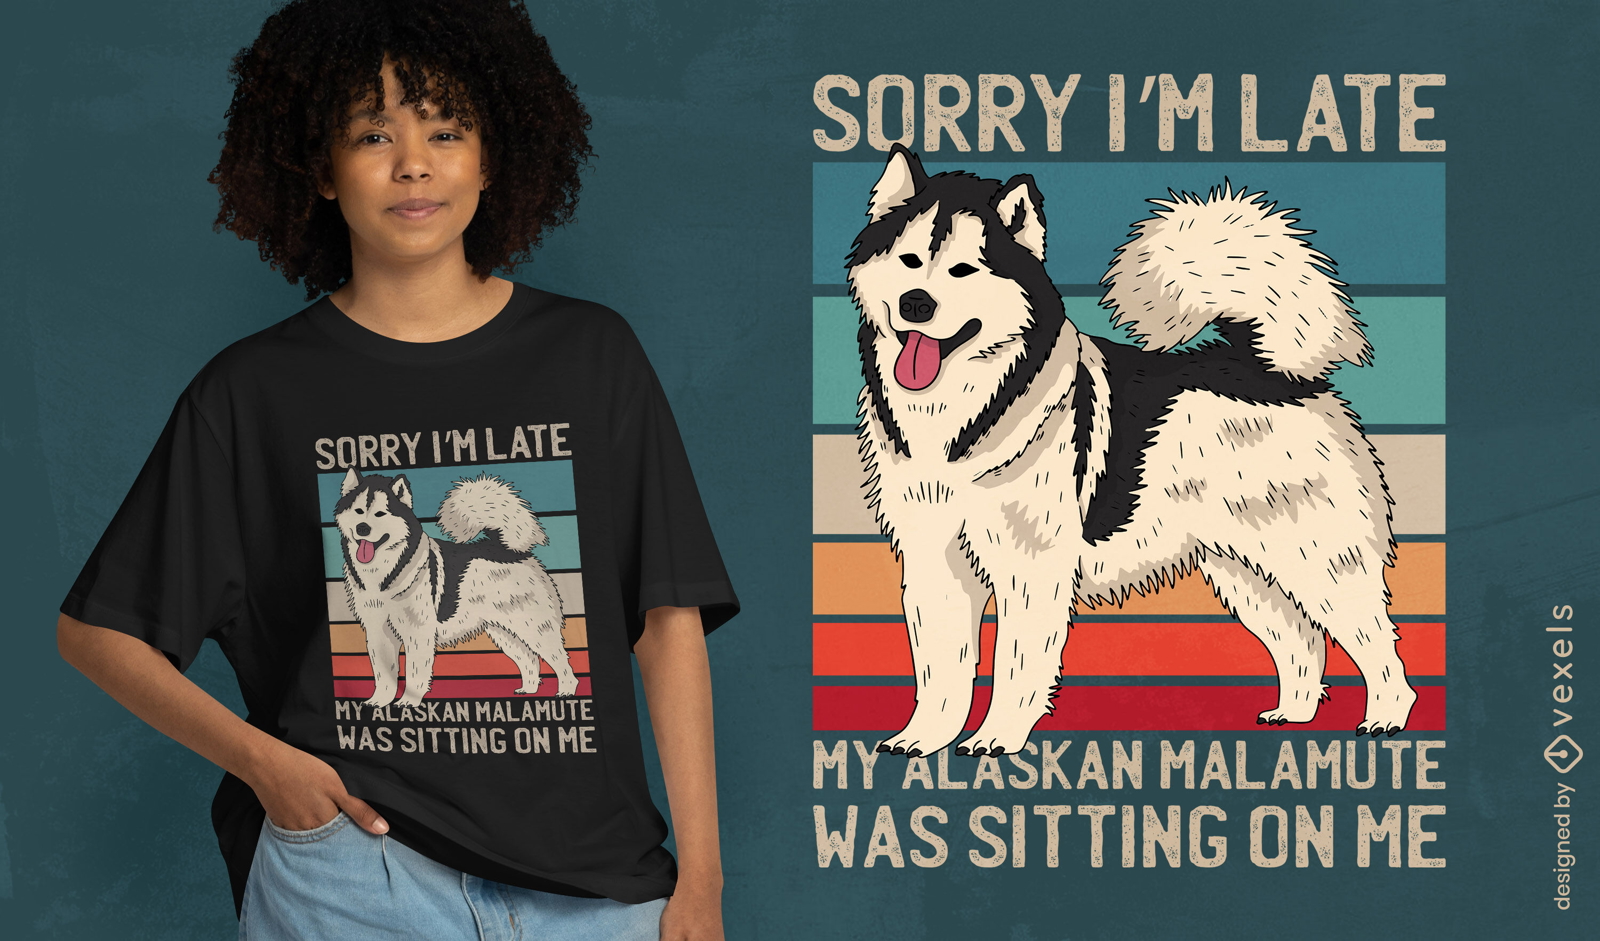 Alaskan malamute dog funny quote t-shirt design